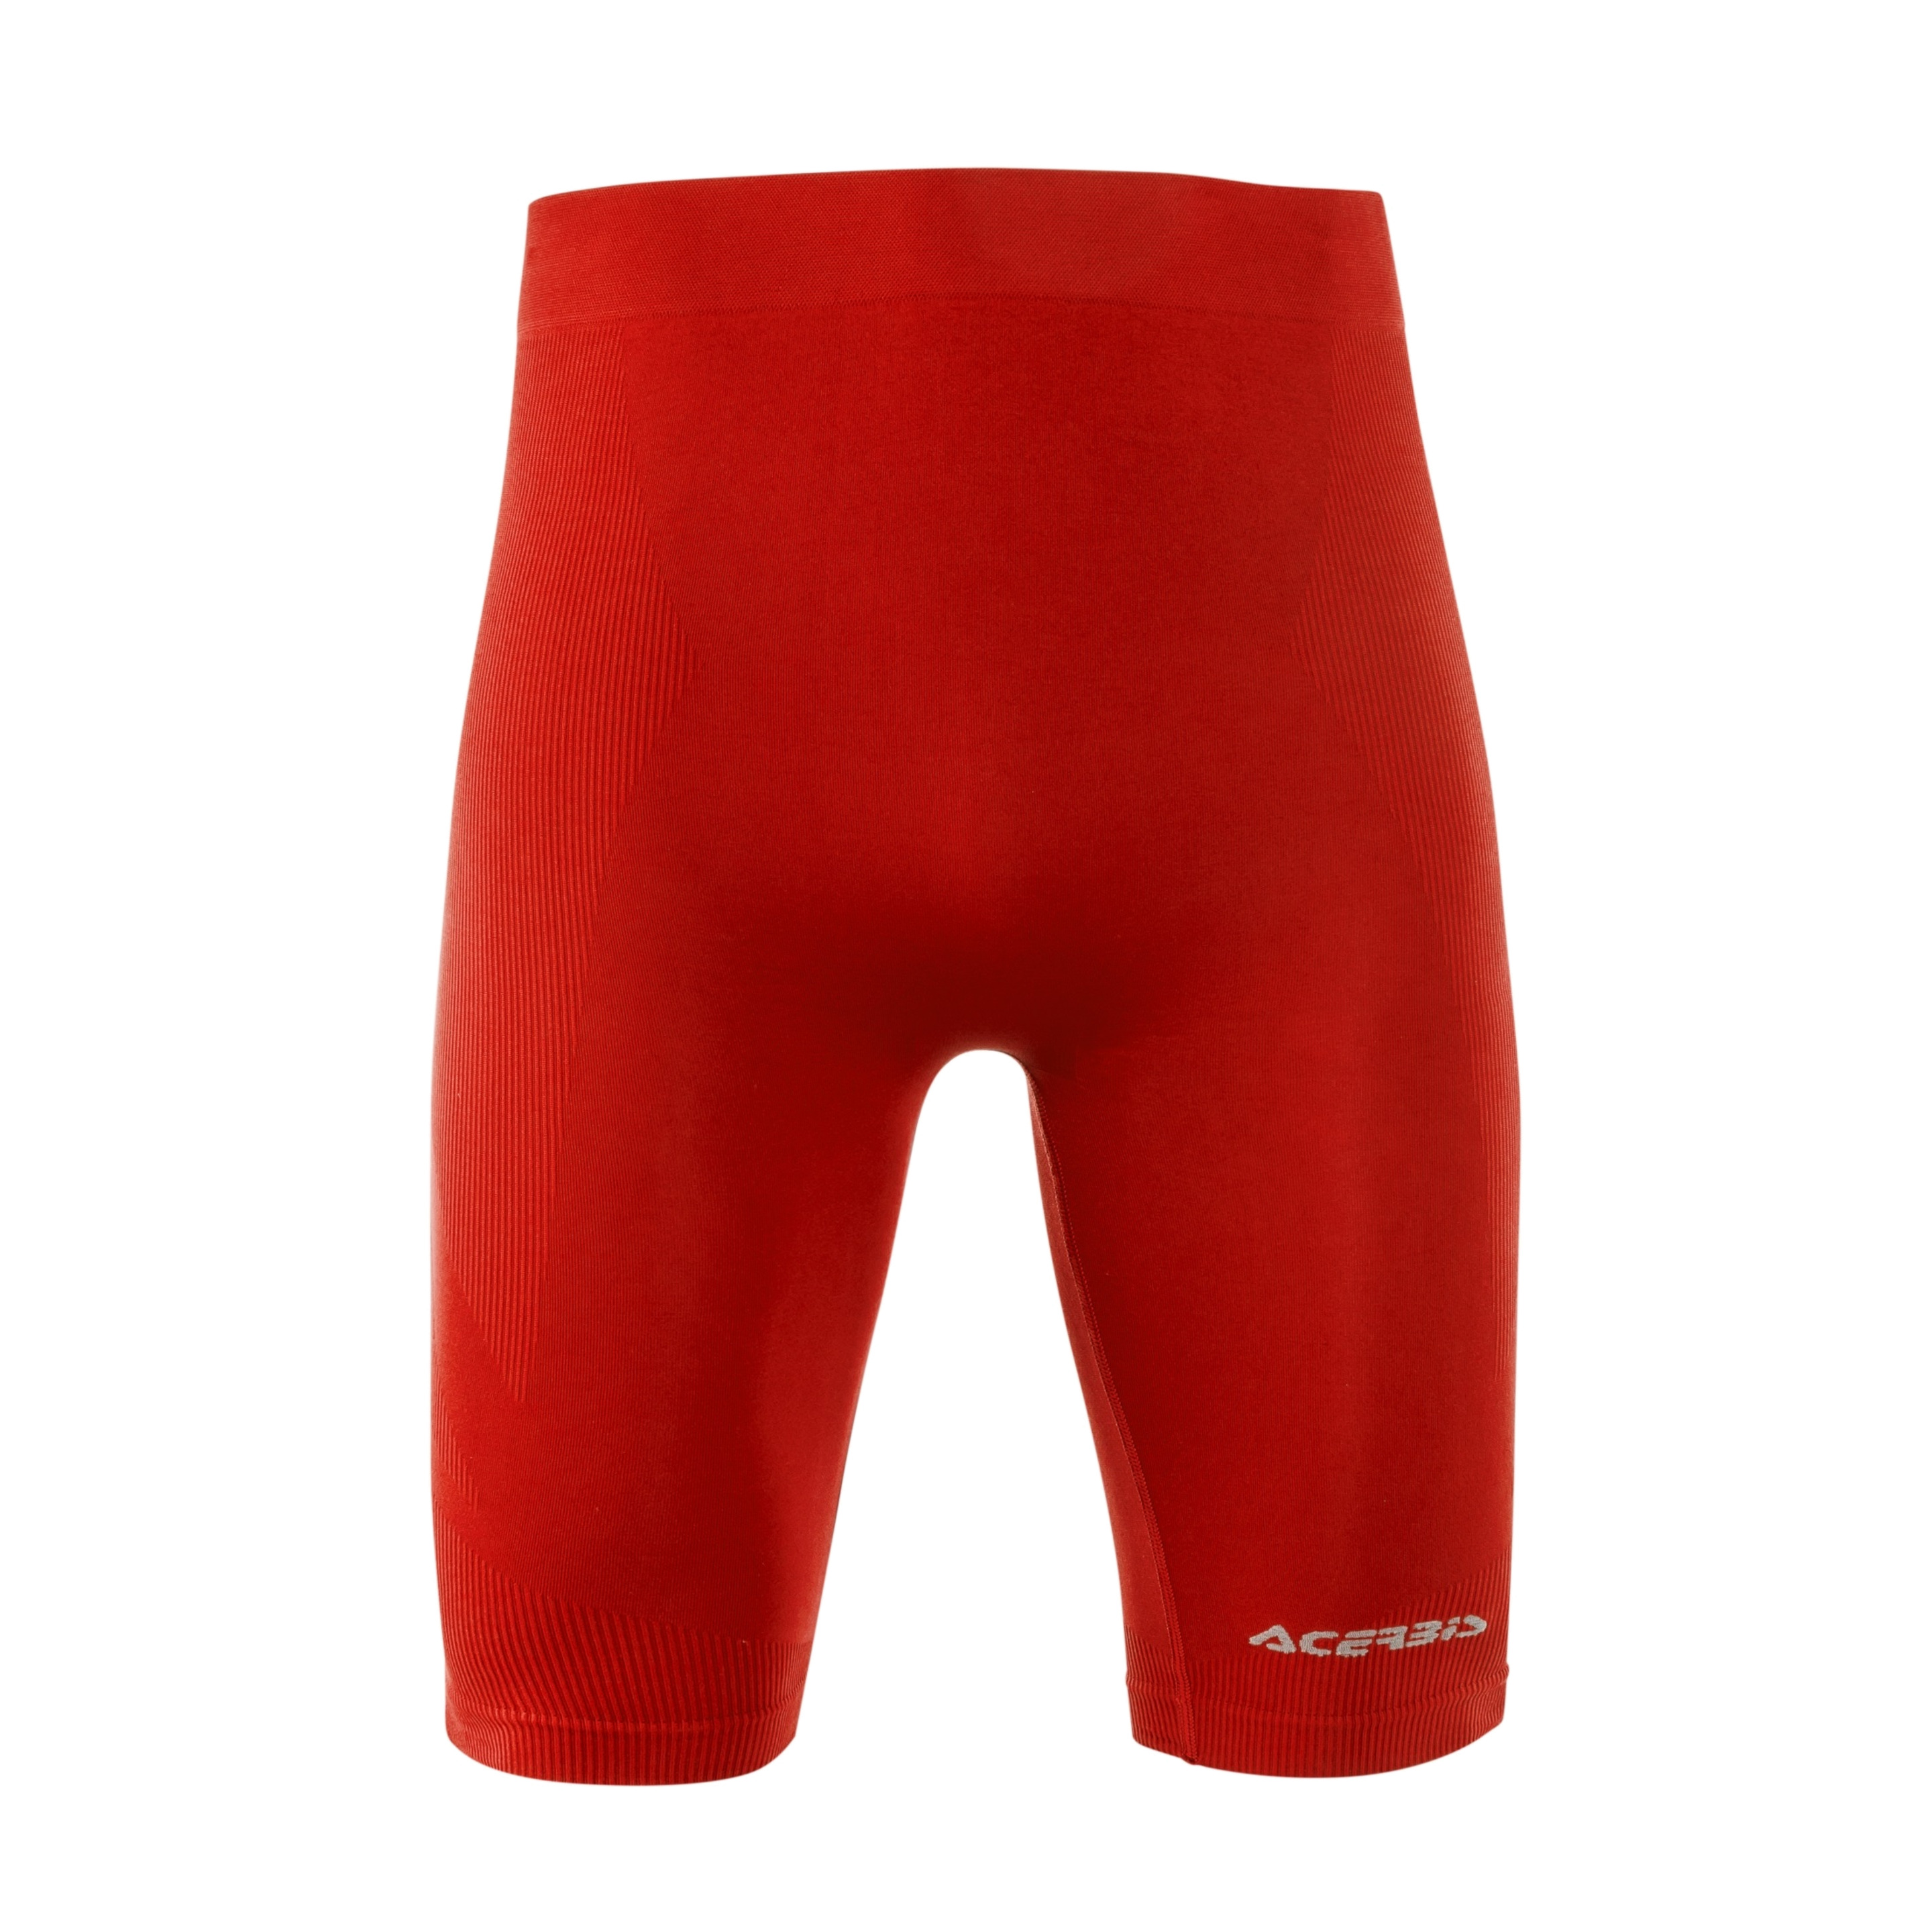 Pantalón Acerbis Interior Evo - Rojo - Bermuda deportiva  MKP